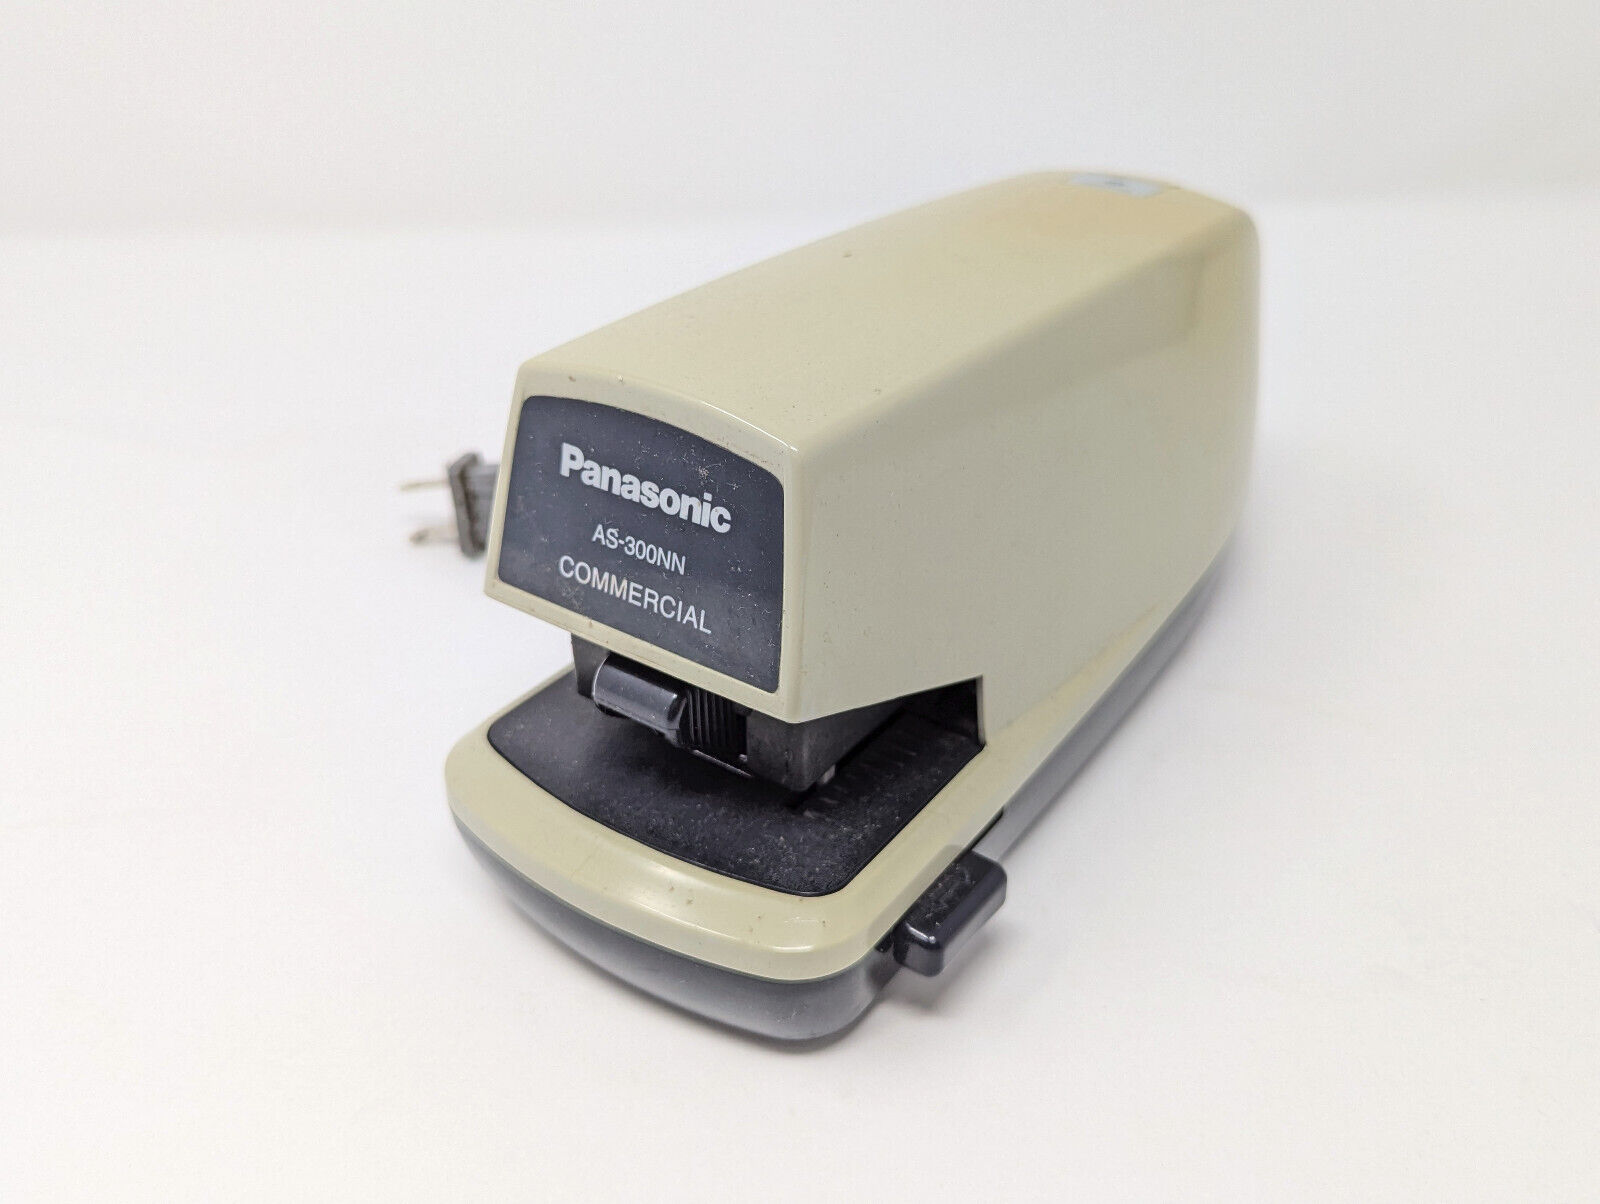 Vintage Panasonic Commercial AS-300NN Electric Stapler w/ Adj Depth